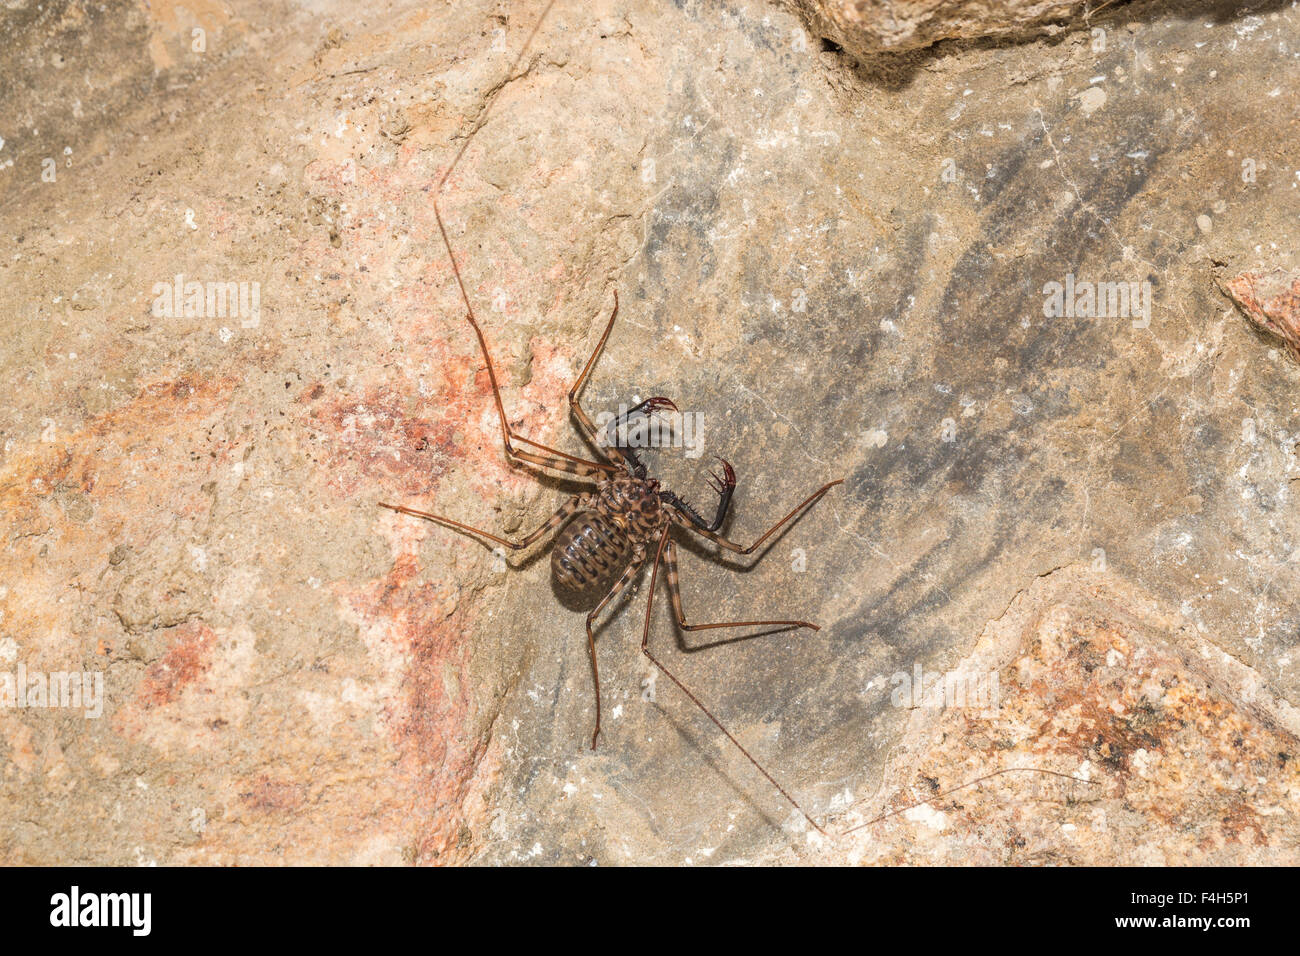 Araña látigo o látigo tailless scorpion (Amblypygi), la Isla de Likoma, Lago Malawi, Malawi, Sur-África oriental Foto de stock